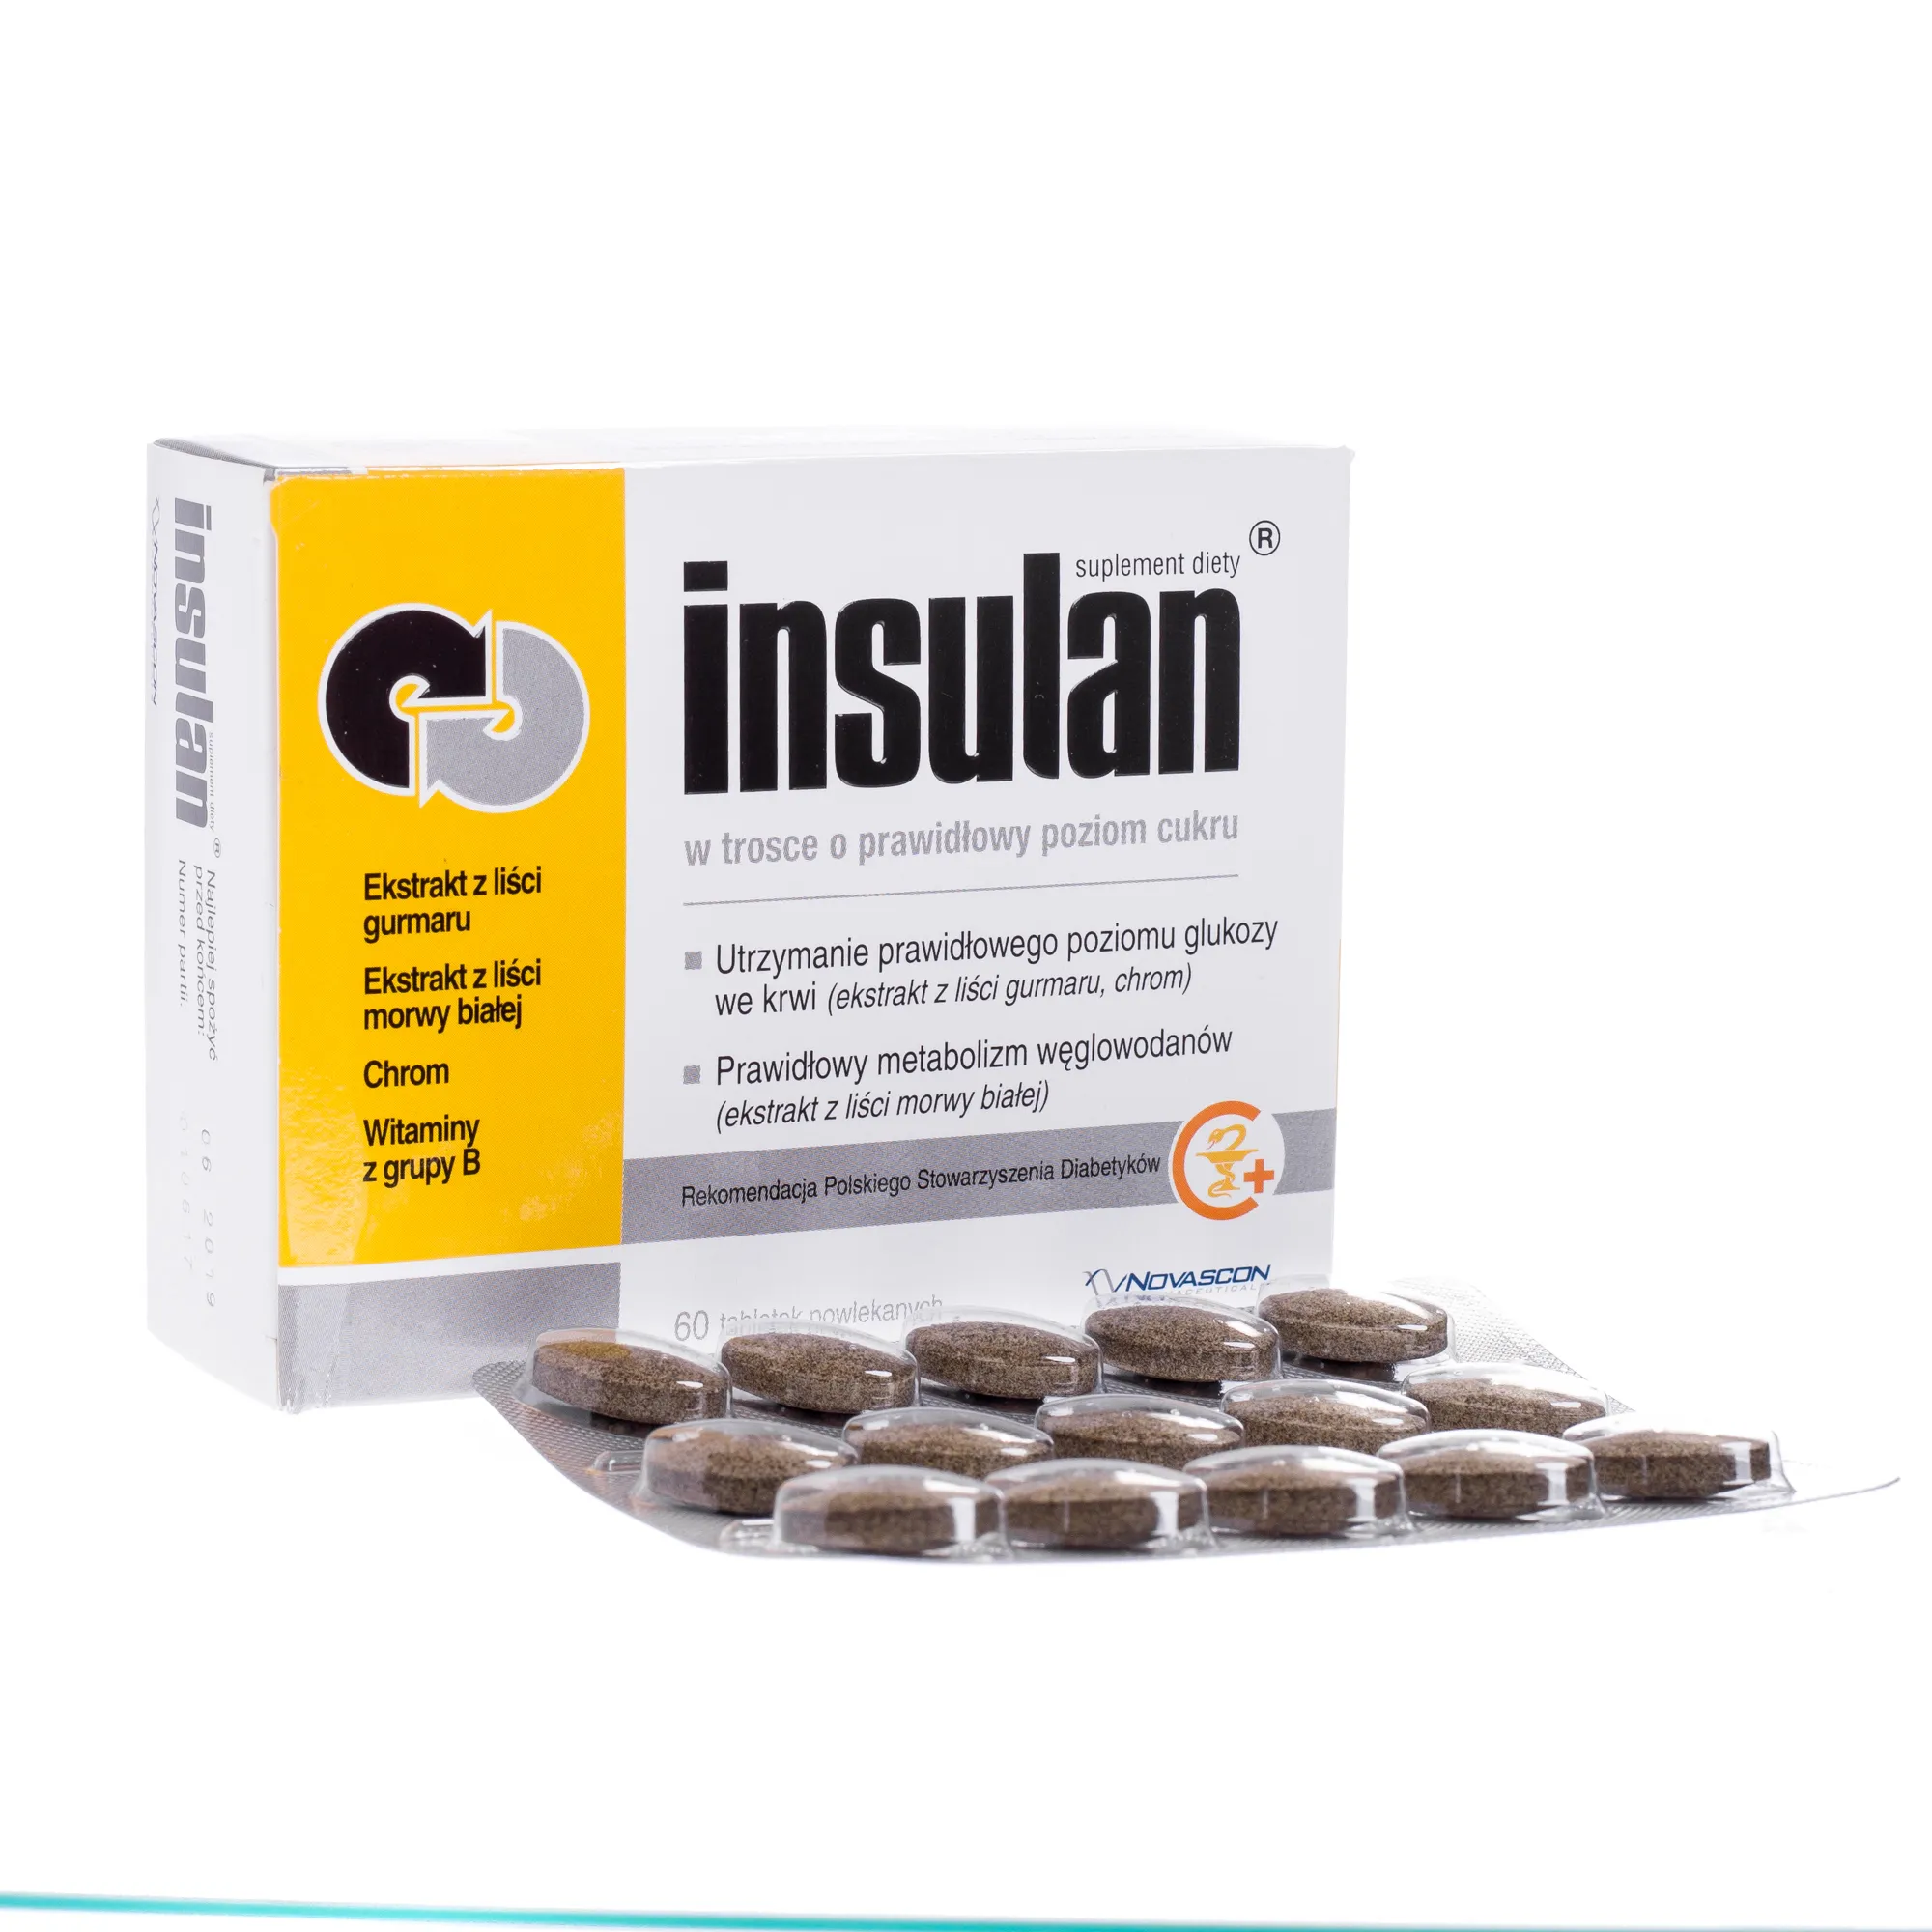 Insulan, suplement diety, 60 tabletek powlekanych